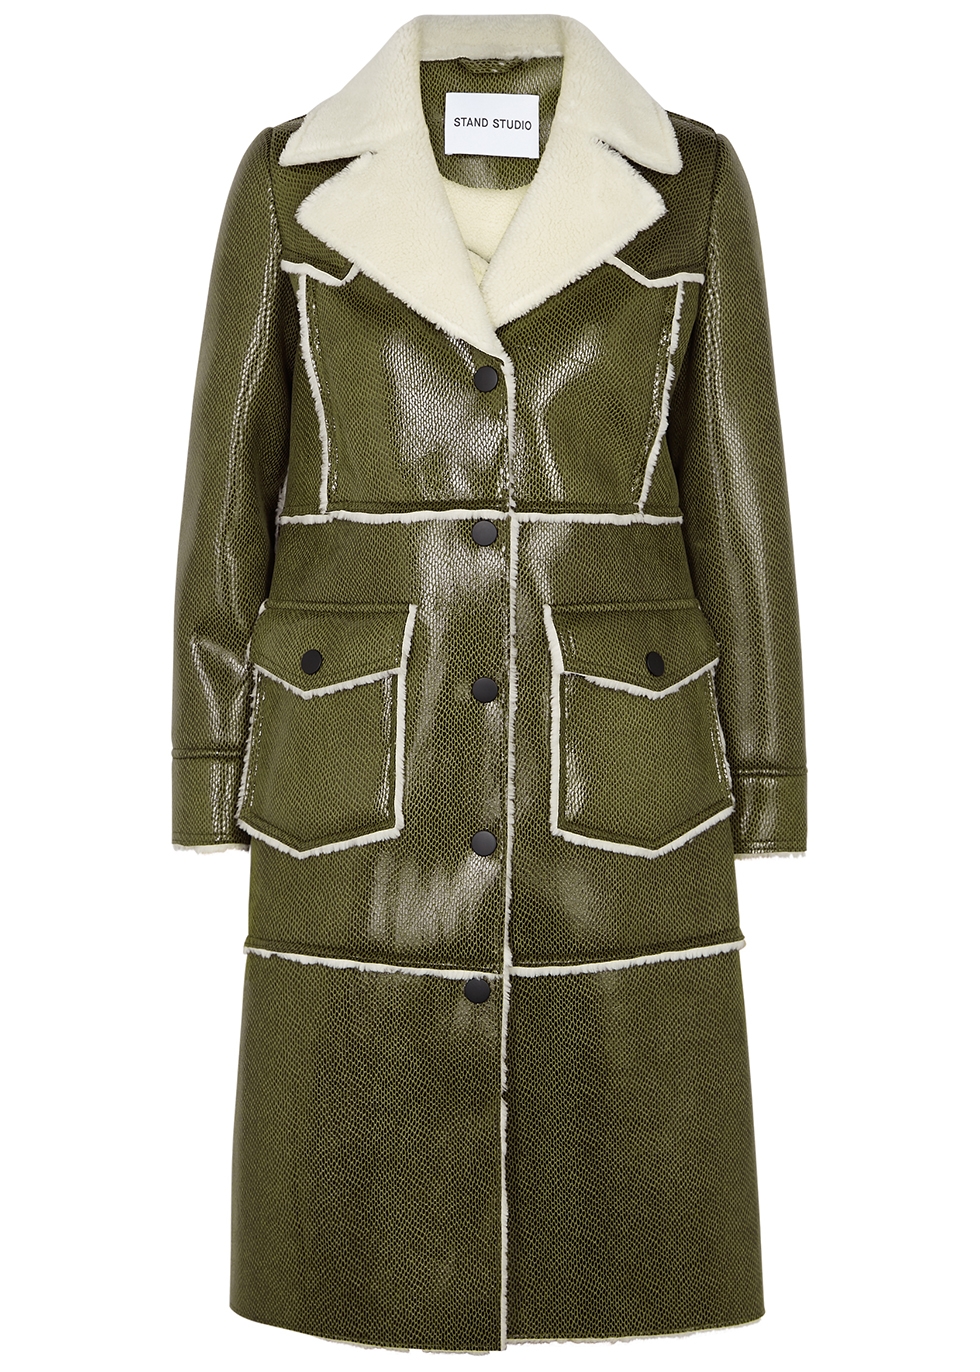 Stand Studio Adele army green faux leather coat - Harvey Nichols